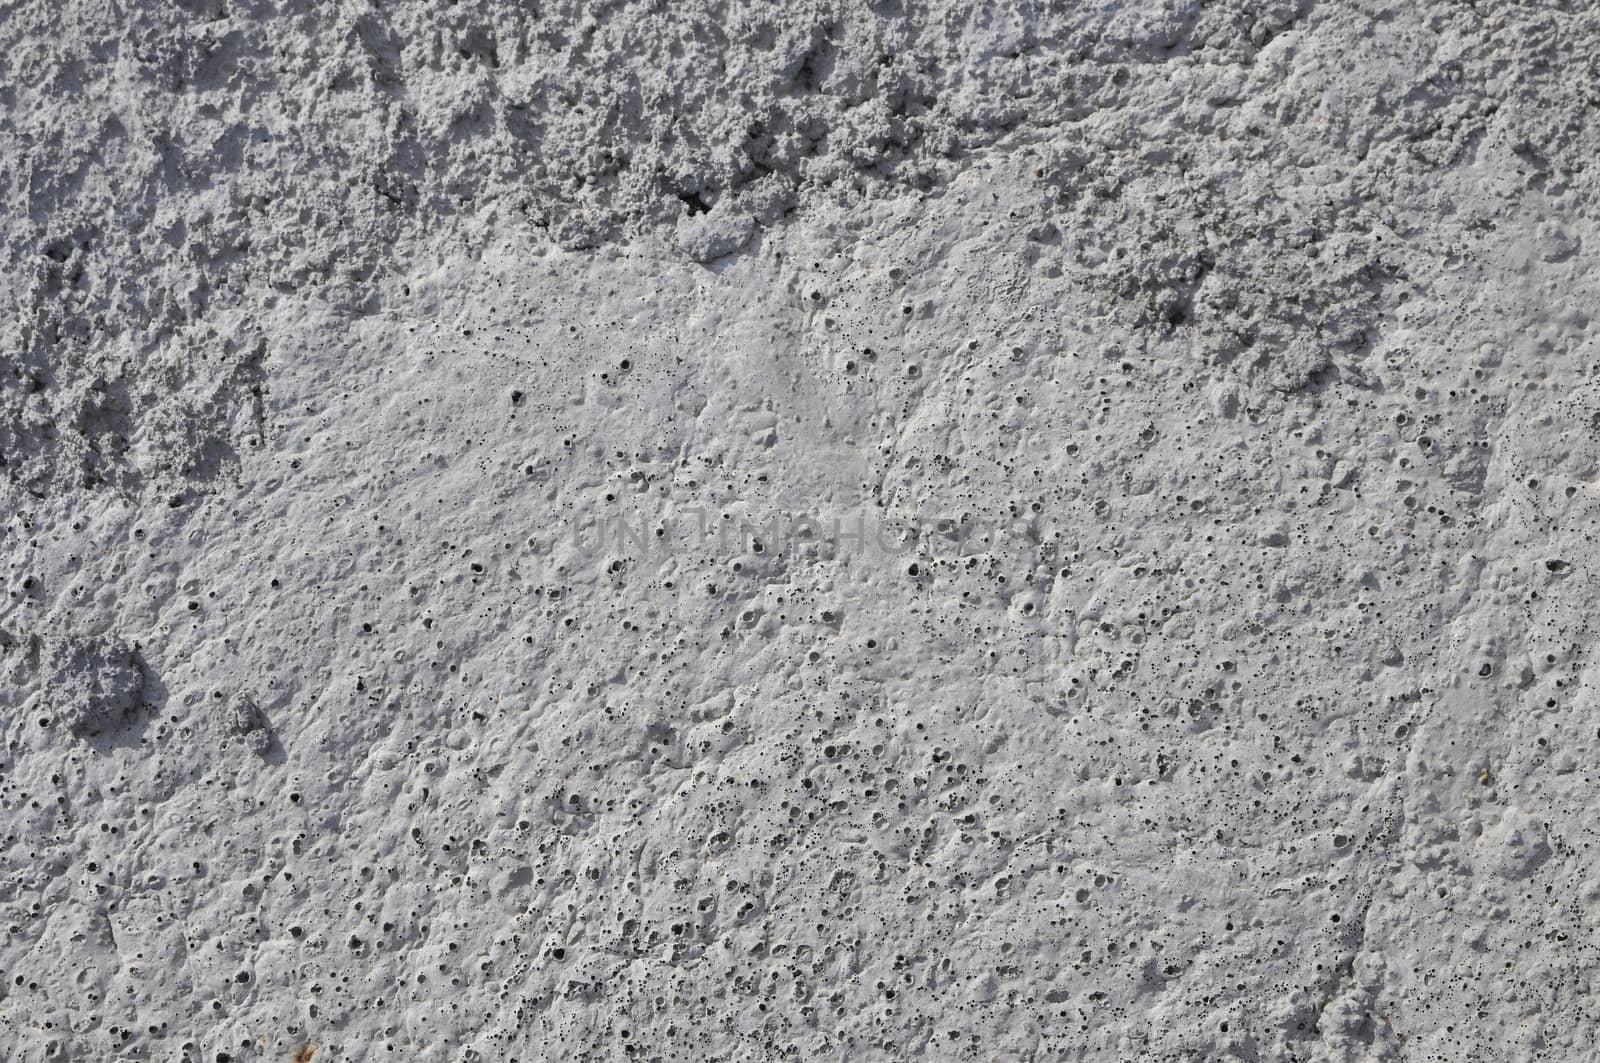 Rough grey concrete texture